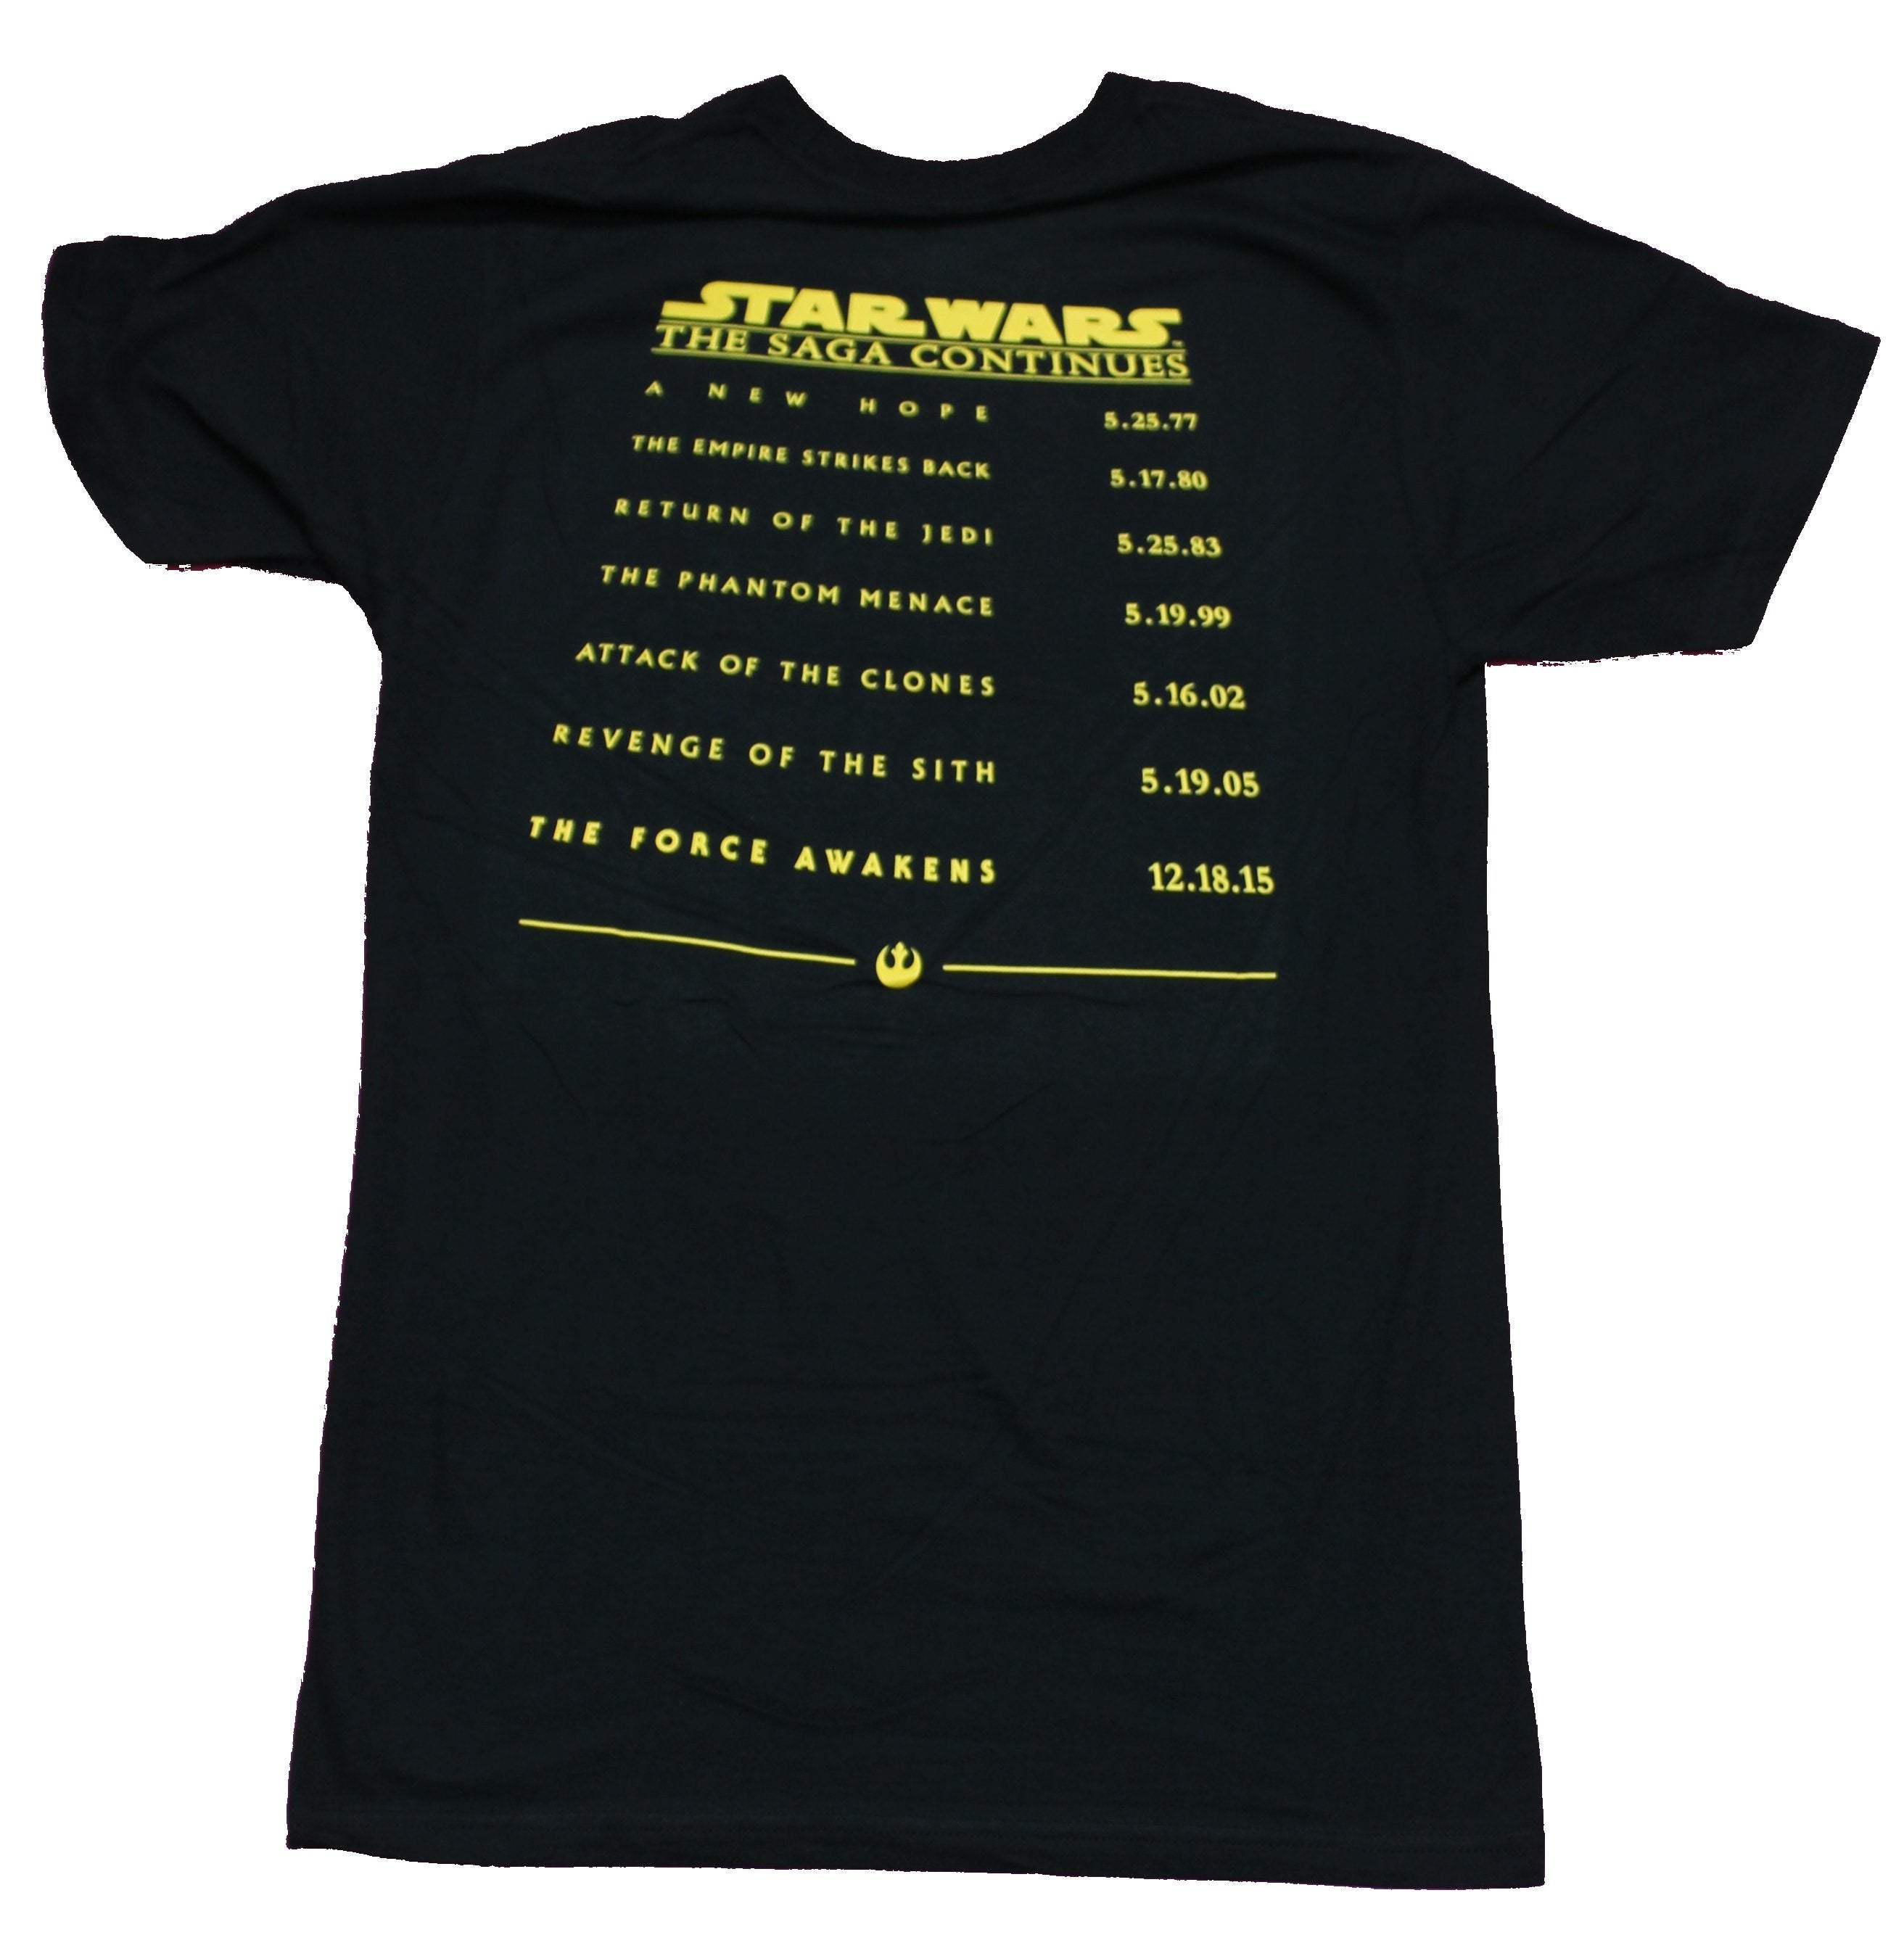 Star Wars Mens T-Shirt - The Force Awakens Poster Image